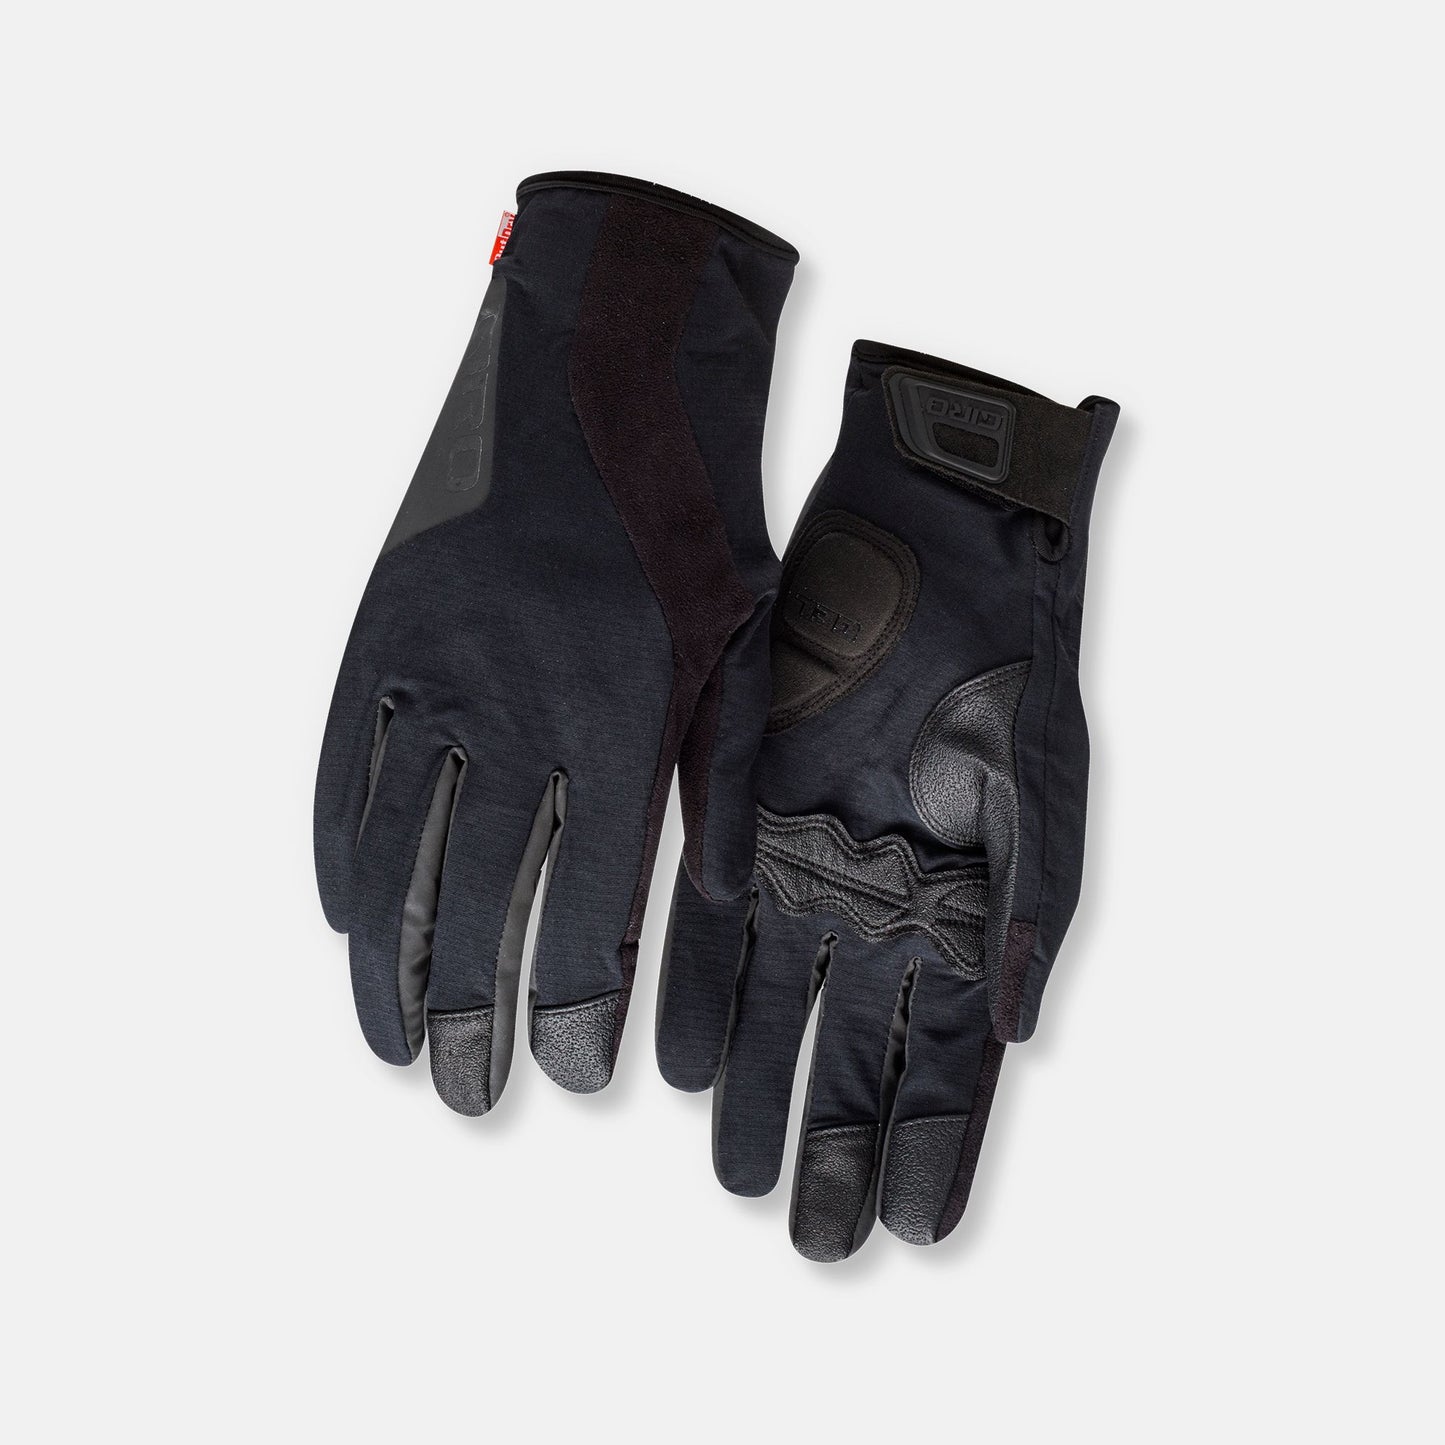 Giro Pivot 2.0 Winter Gloves - Black - Size XL